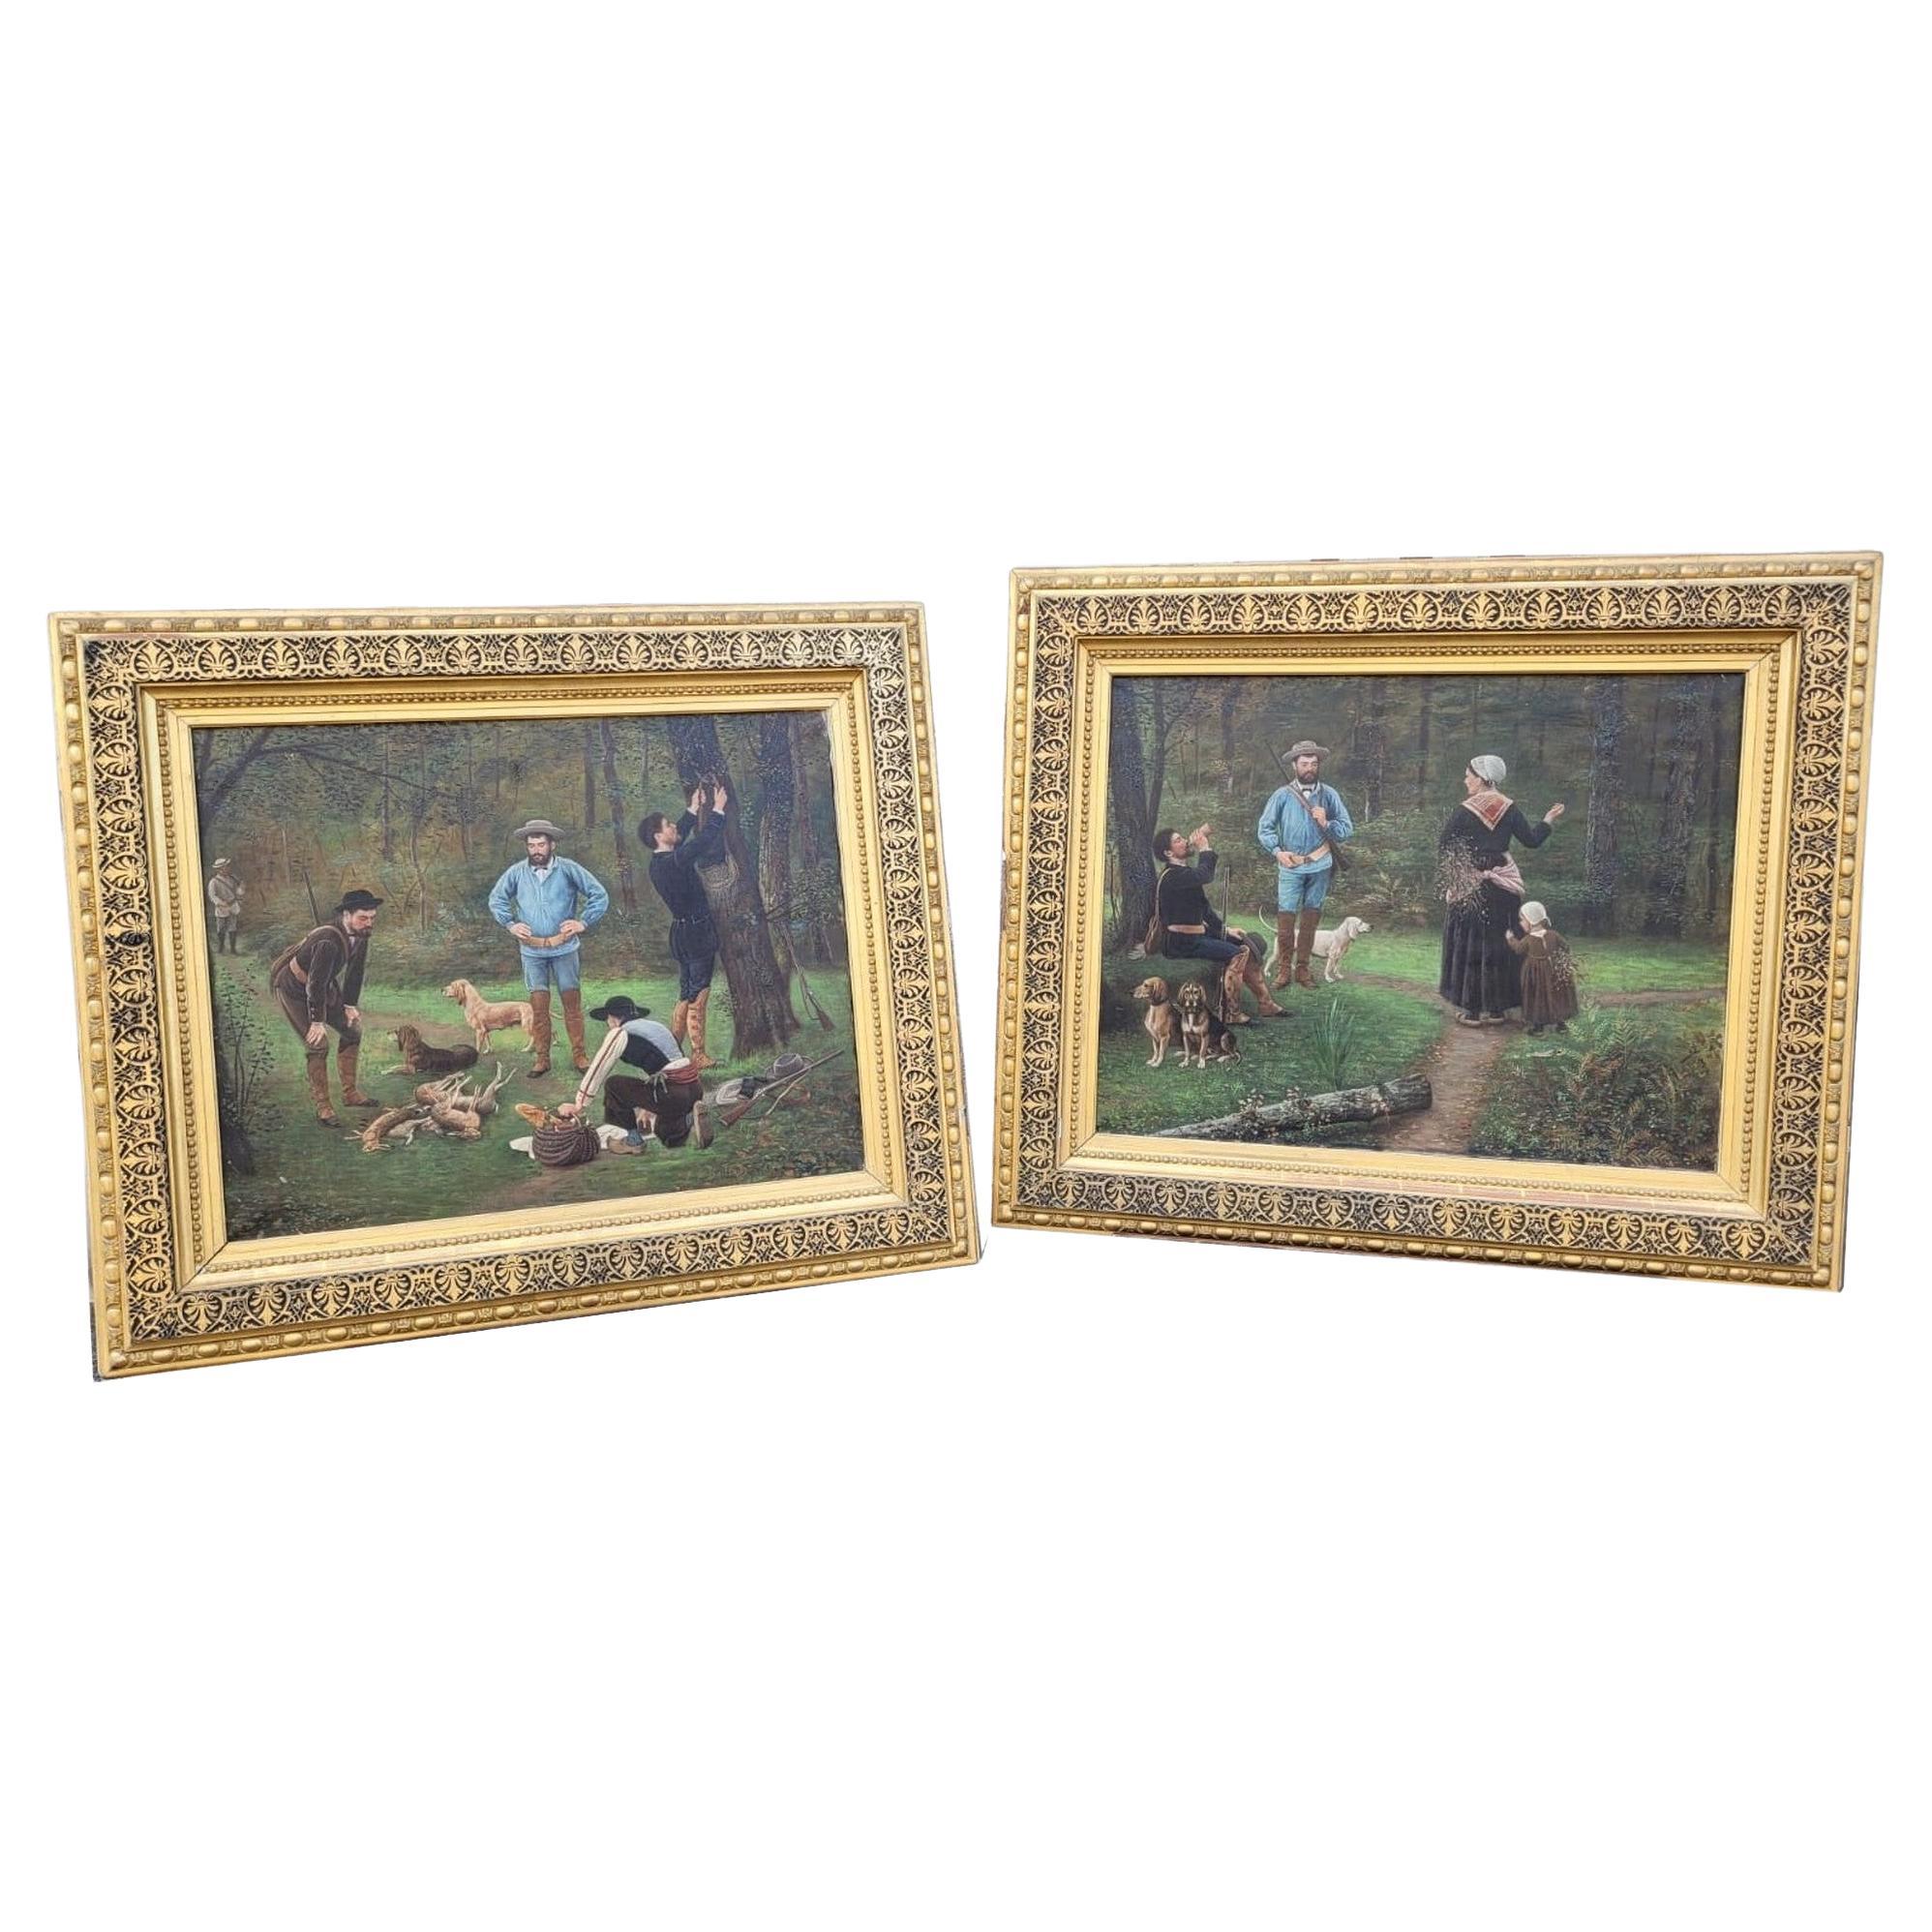 F Brillaud, Pair of Paintings, Hunting Scenes, XIXth Century